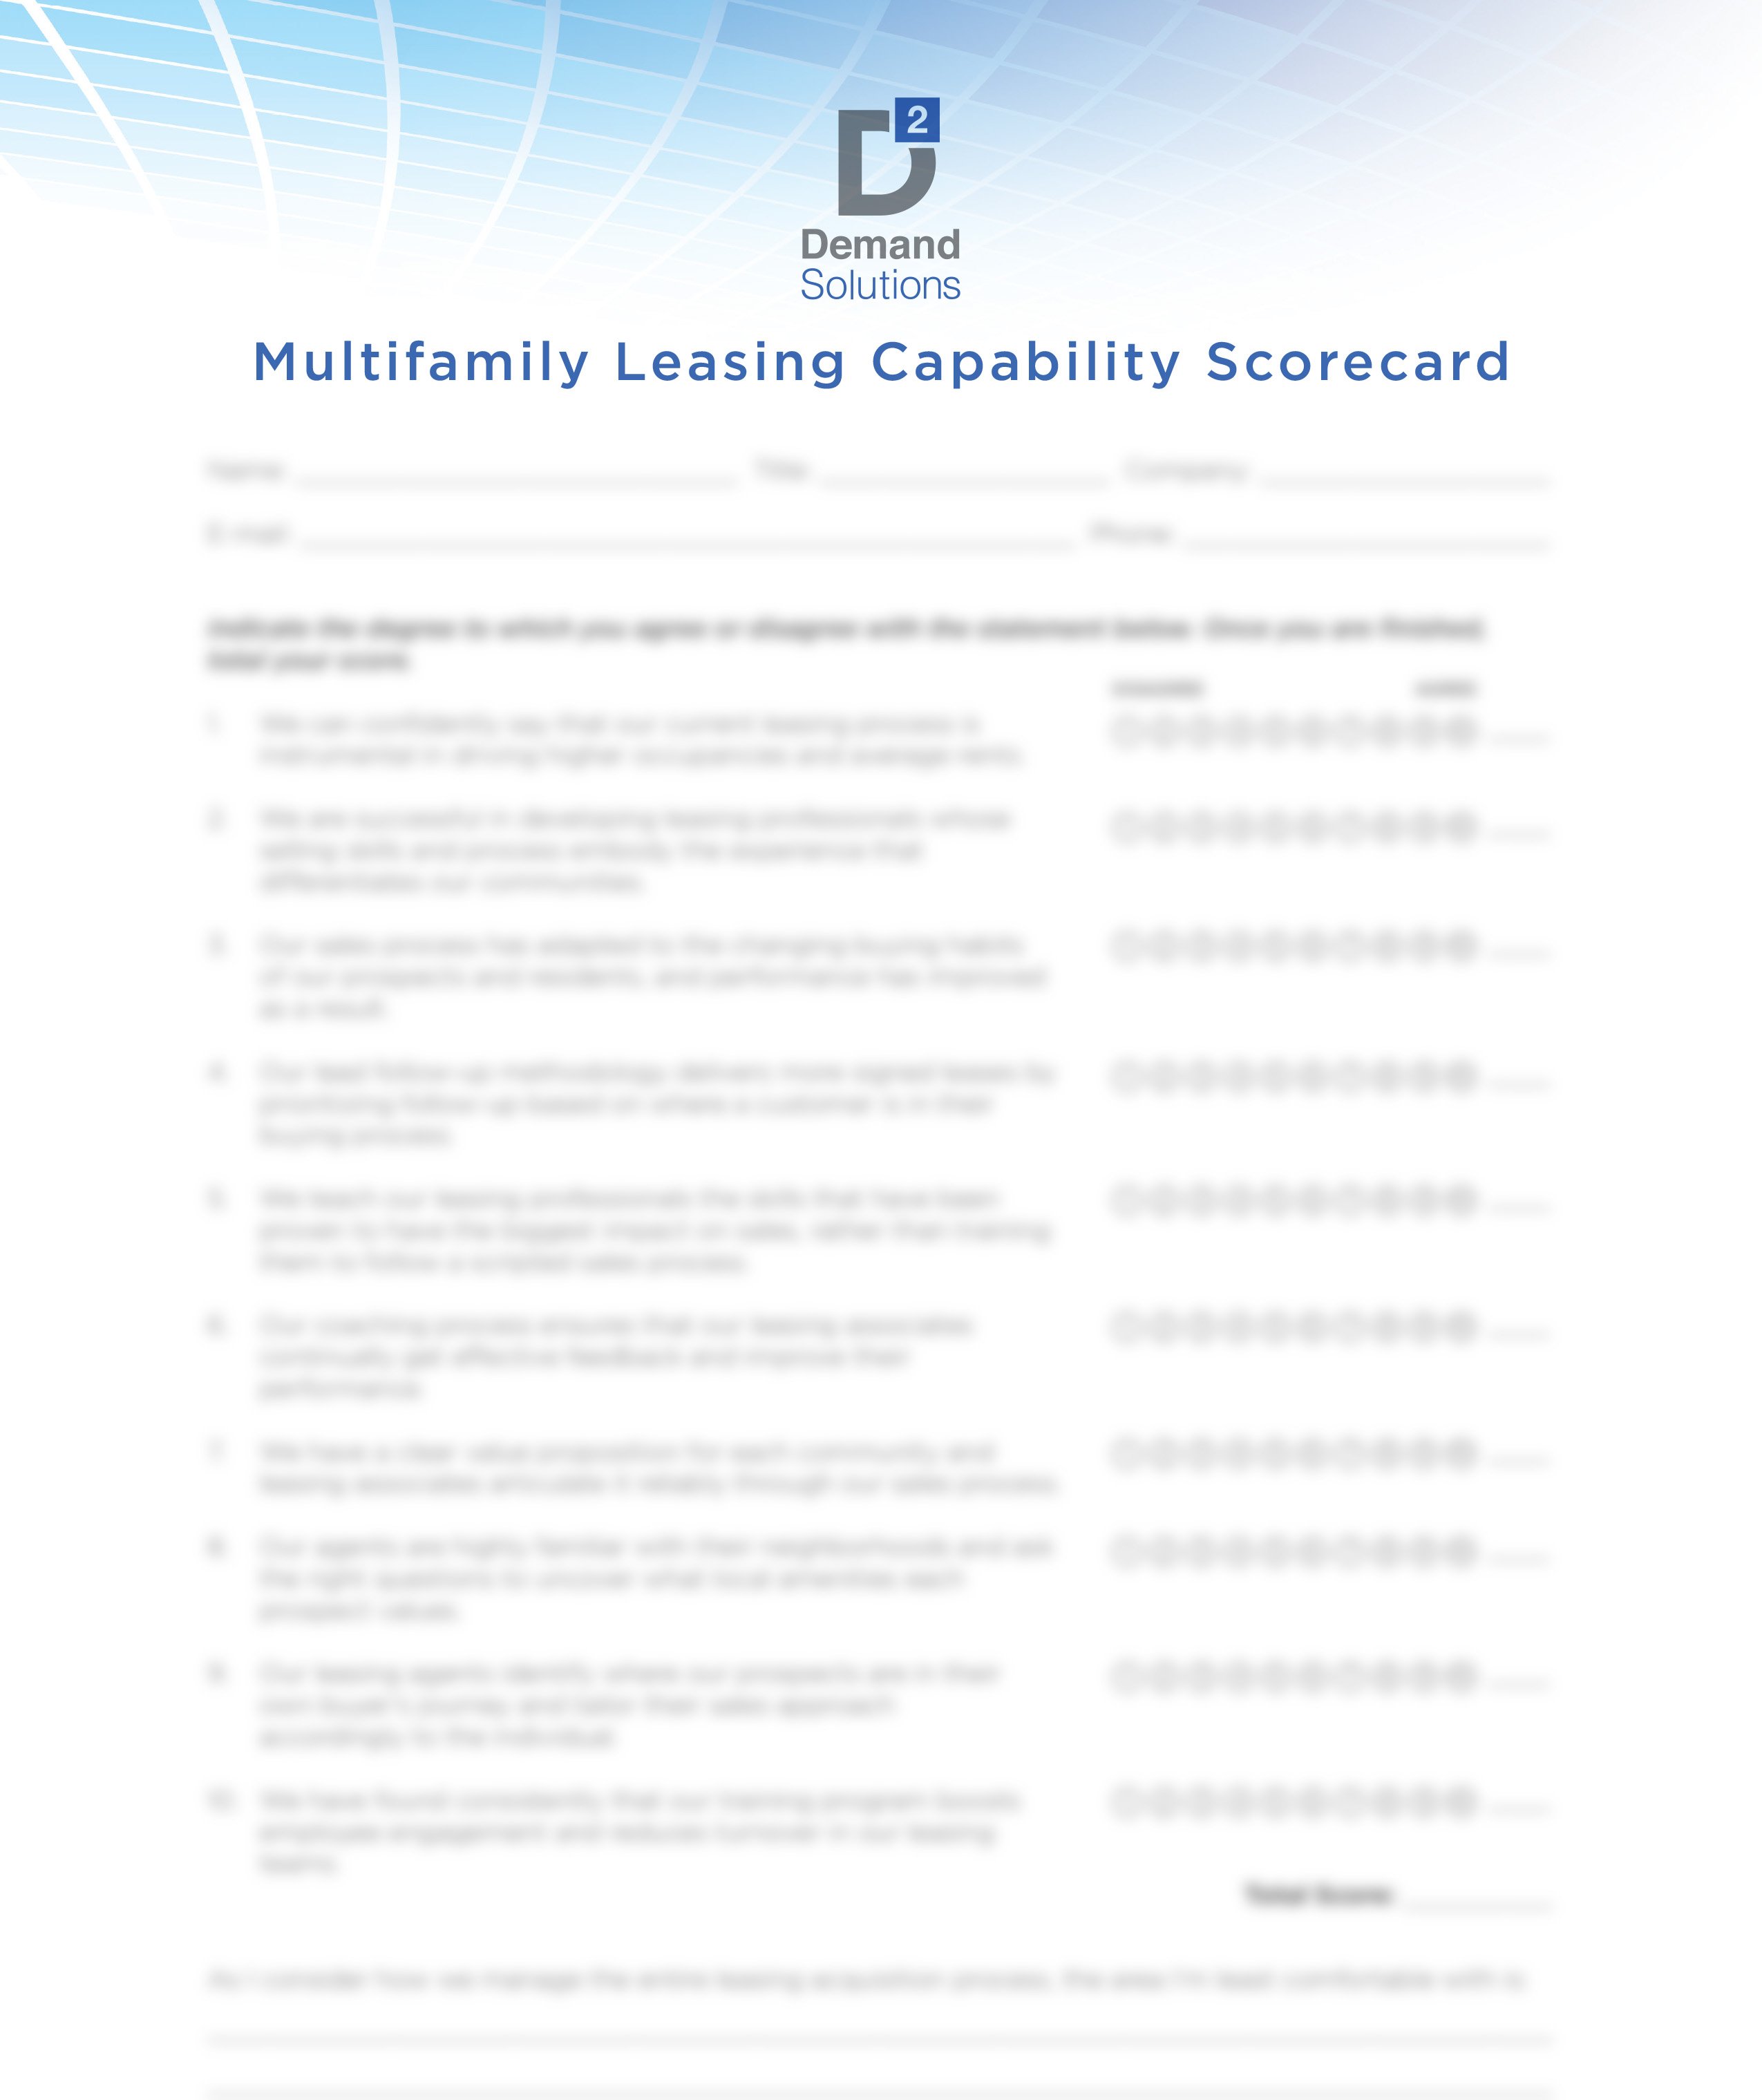 MultifamilyLeasingCapabilitiesScorecard_NEW